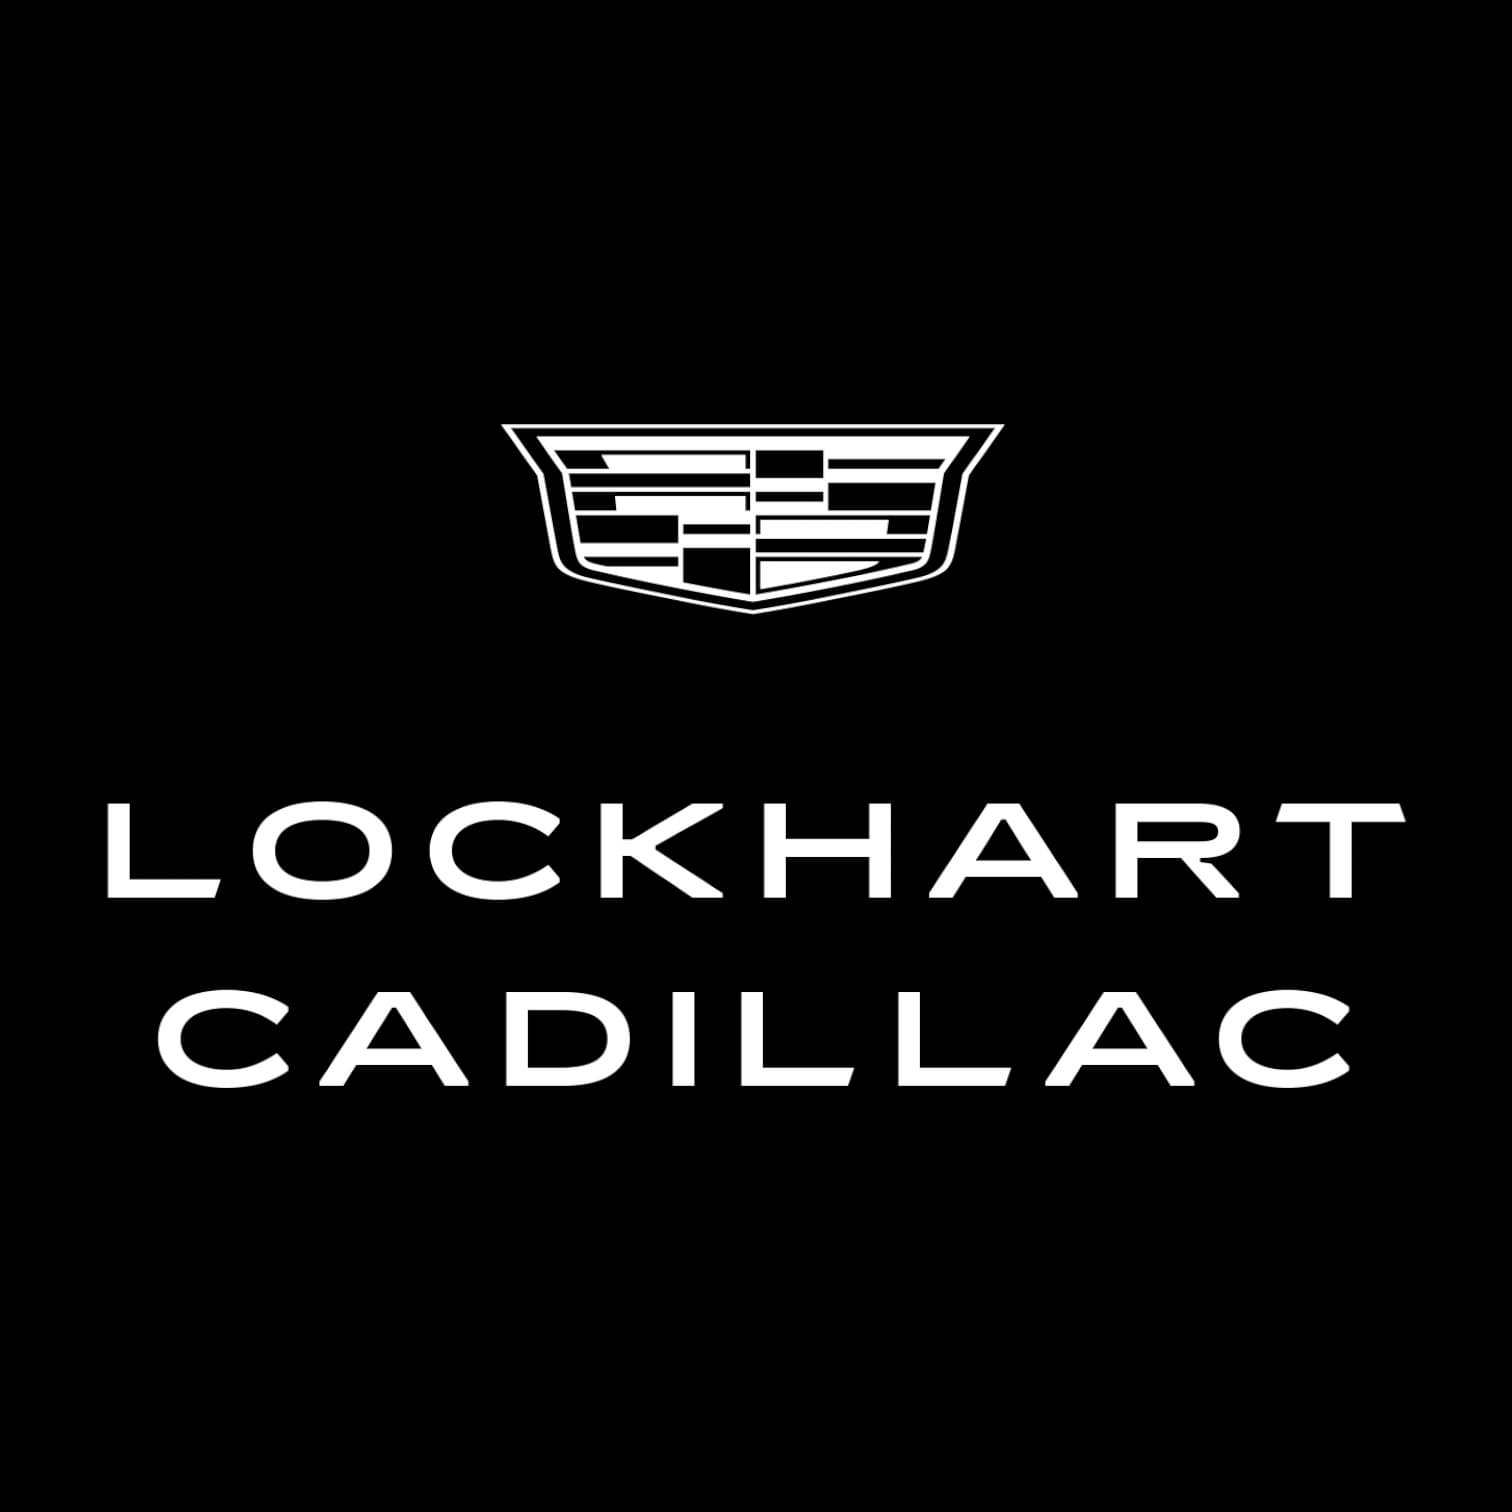 Lockhart Cadillac